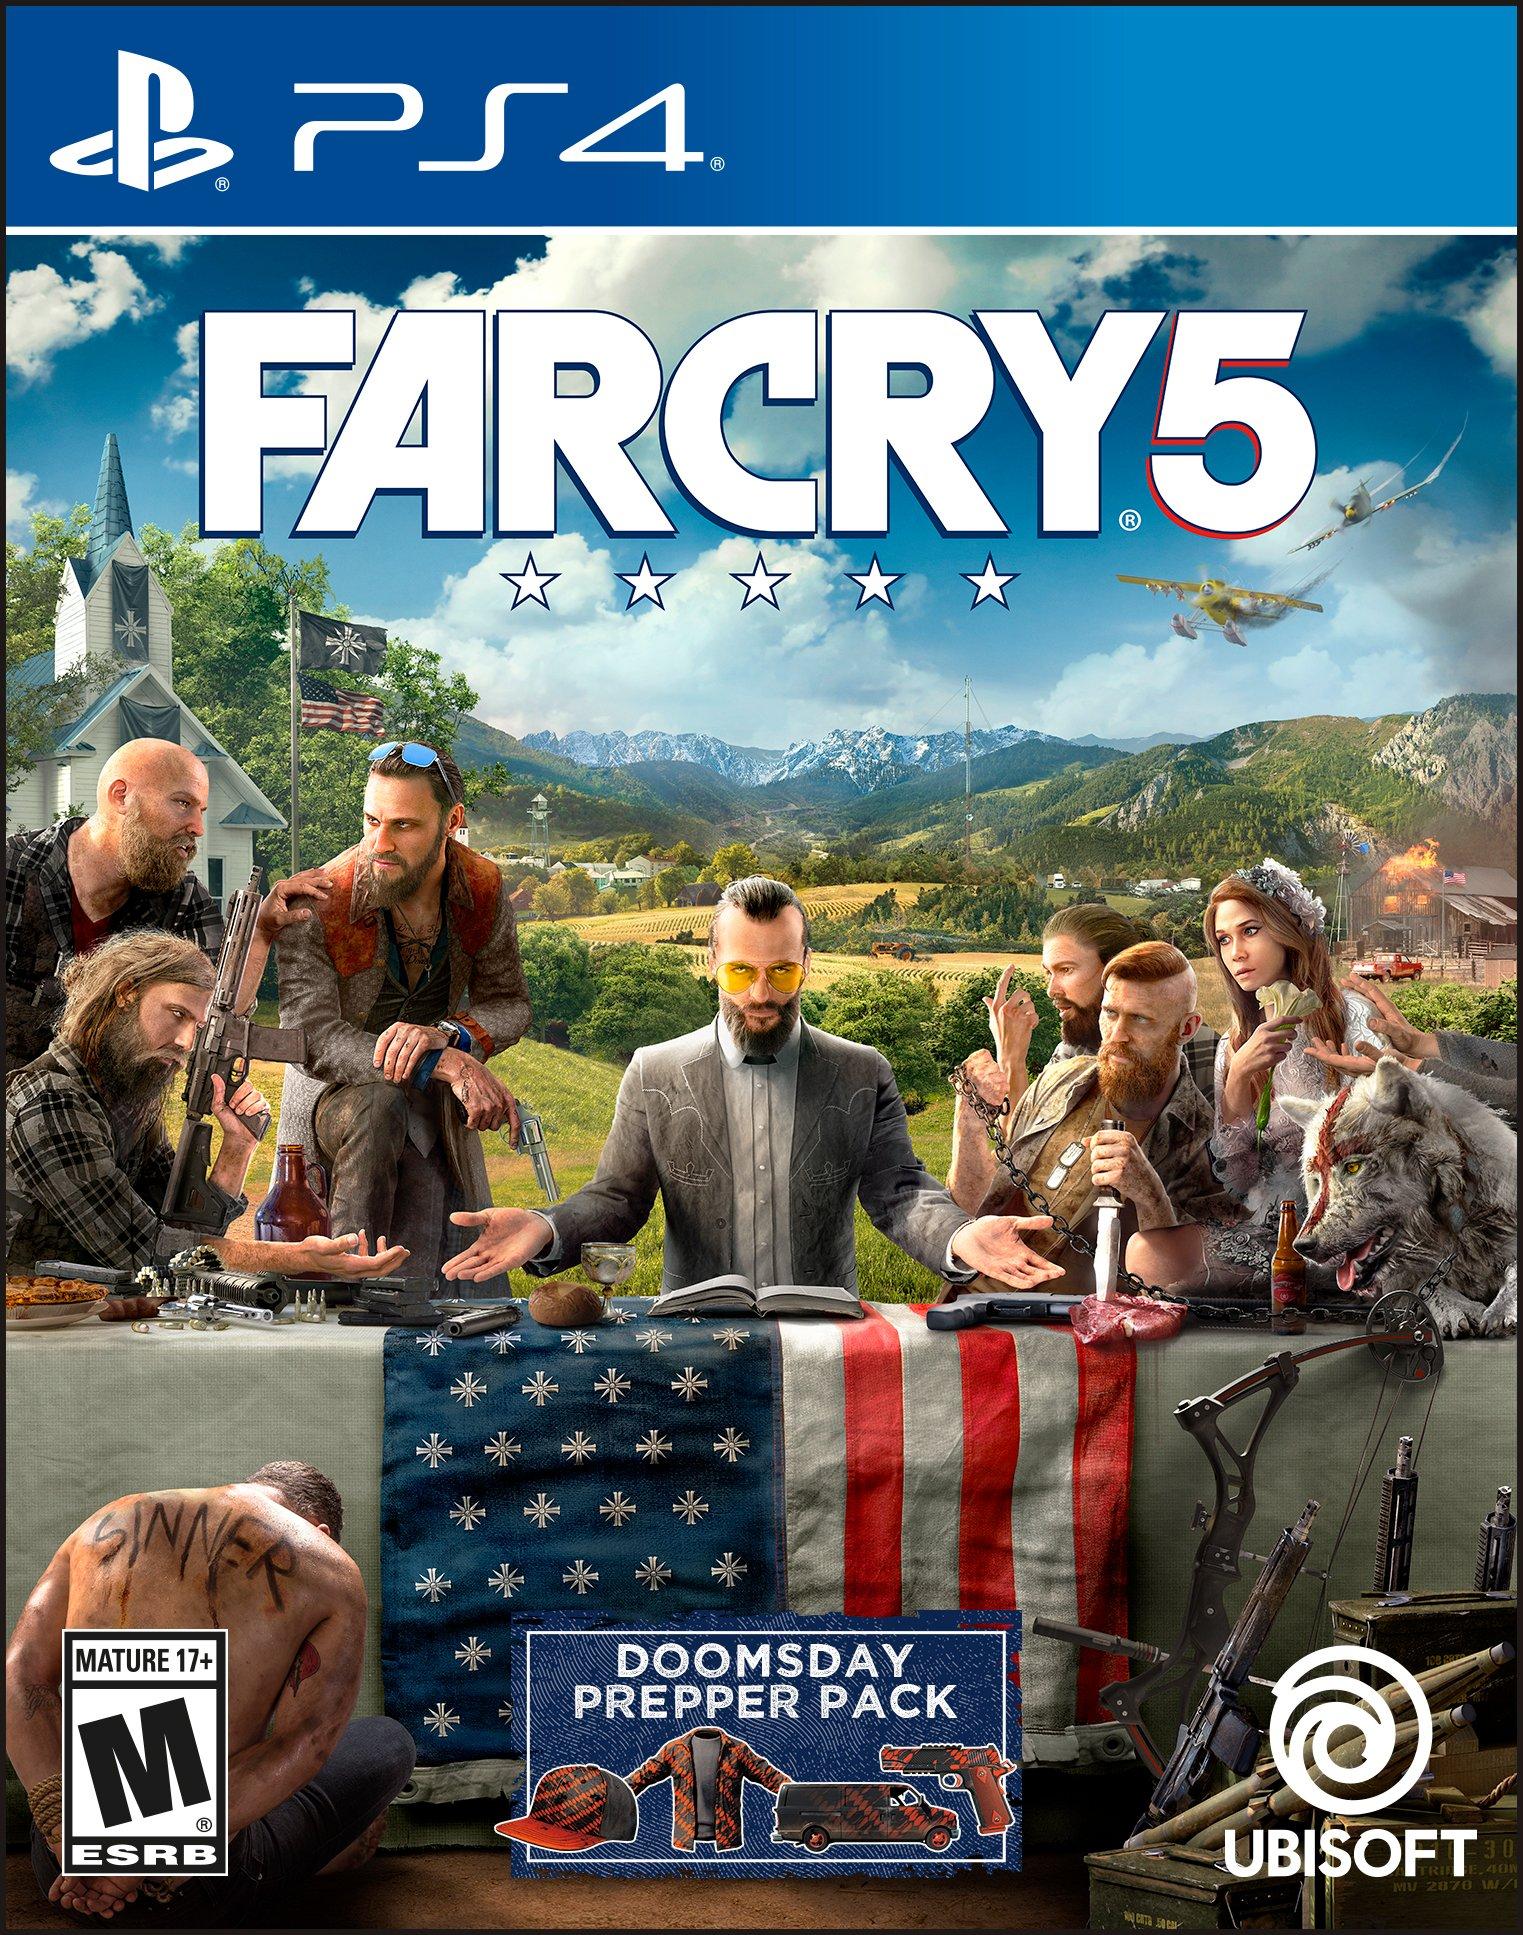  Far Cry 6 PlayStation 5 Standard Edition : Ubisoft: Video Games